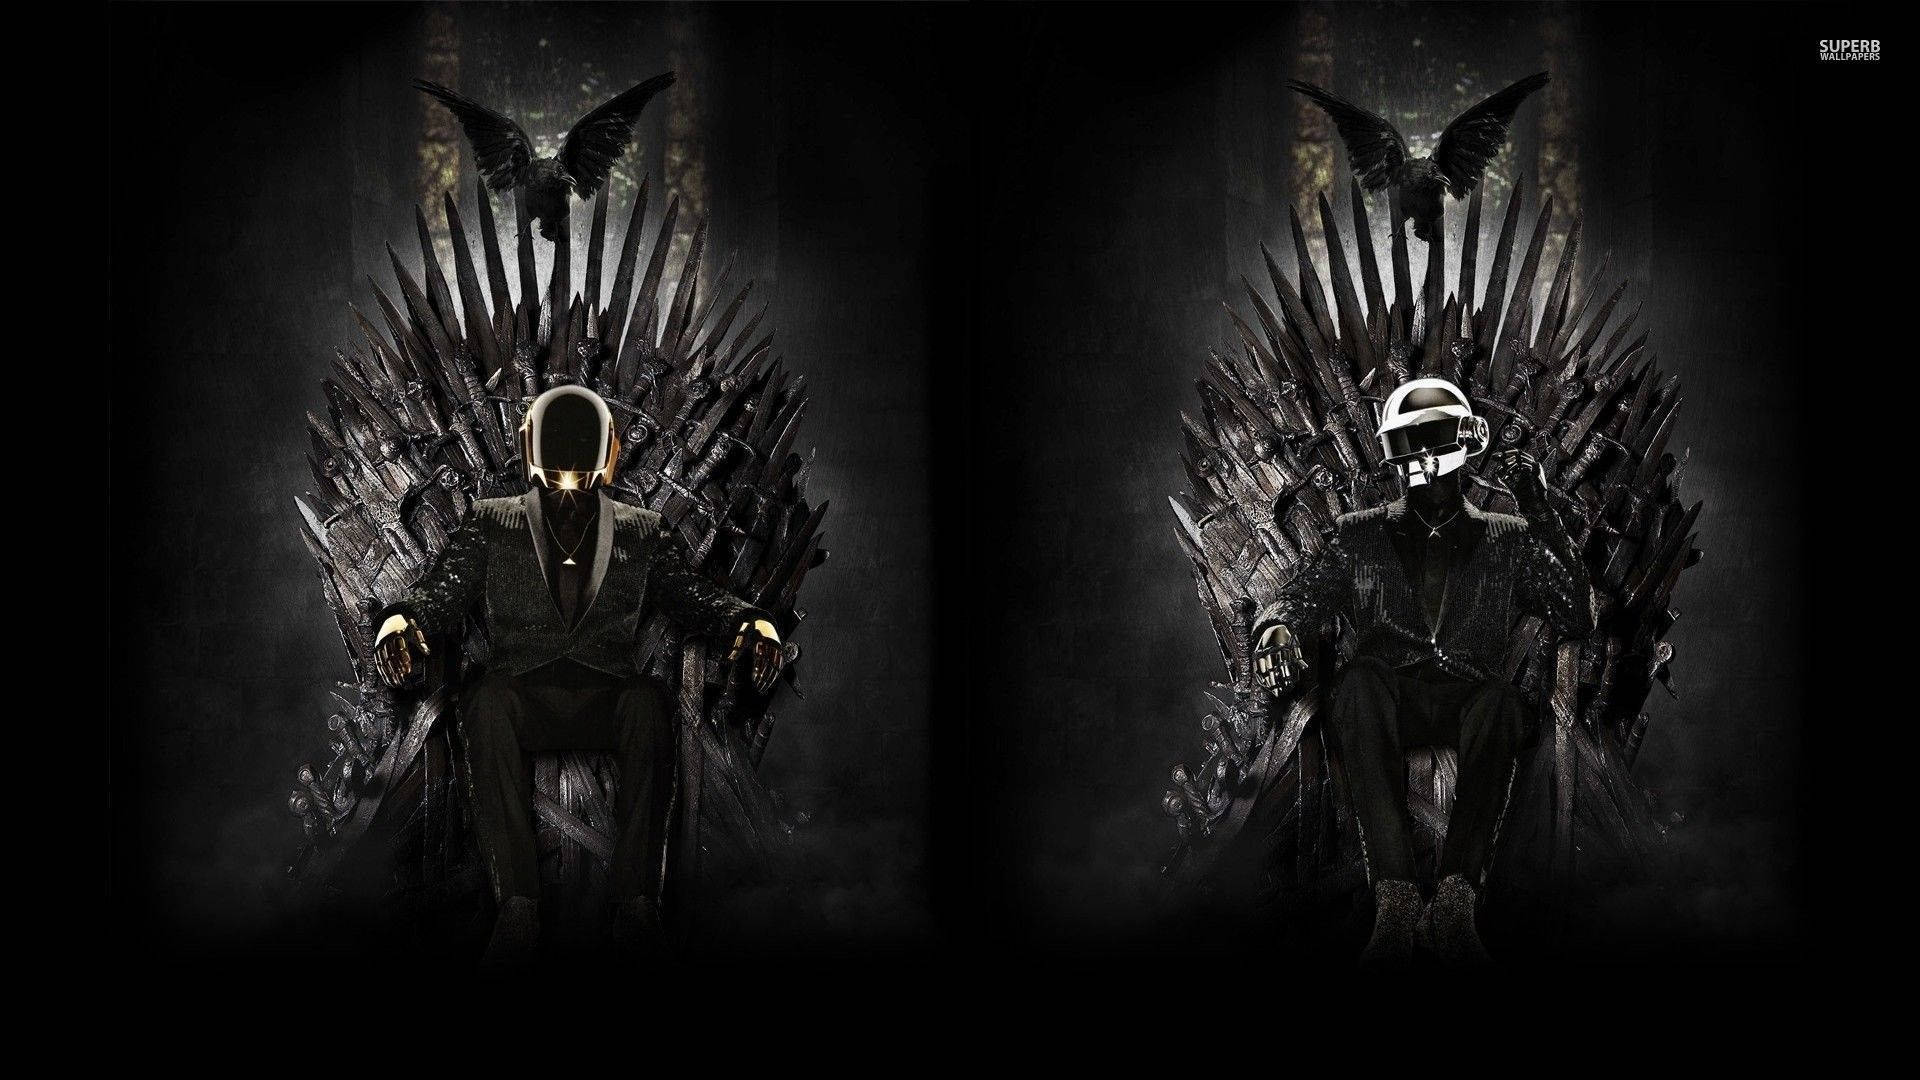 Download Game Of Thrones Wallpaper